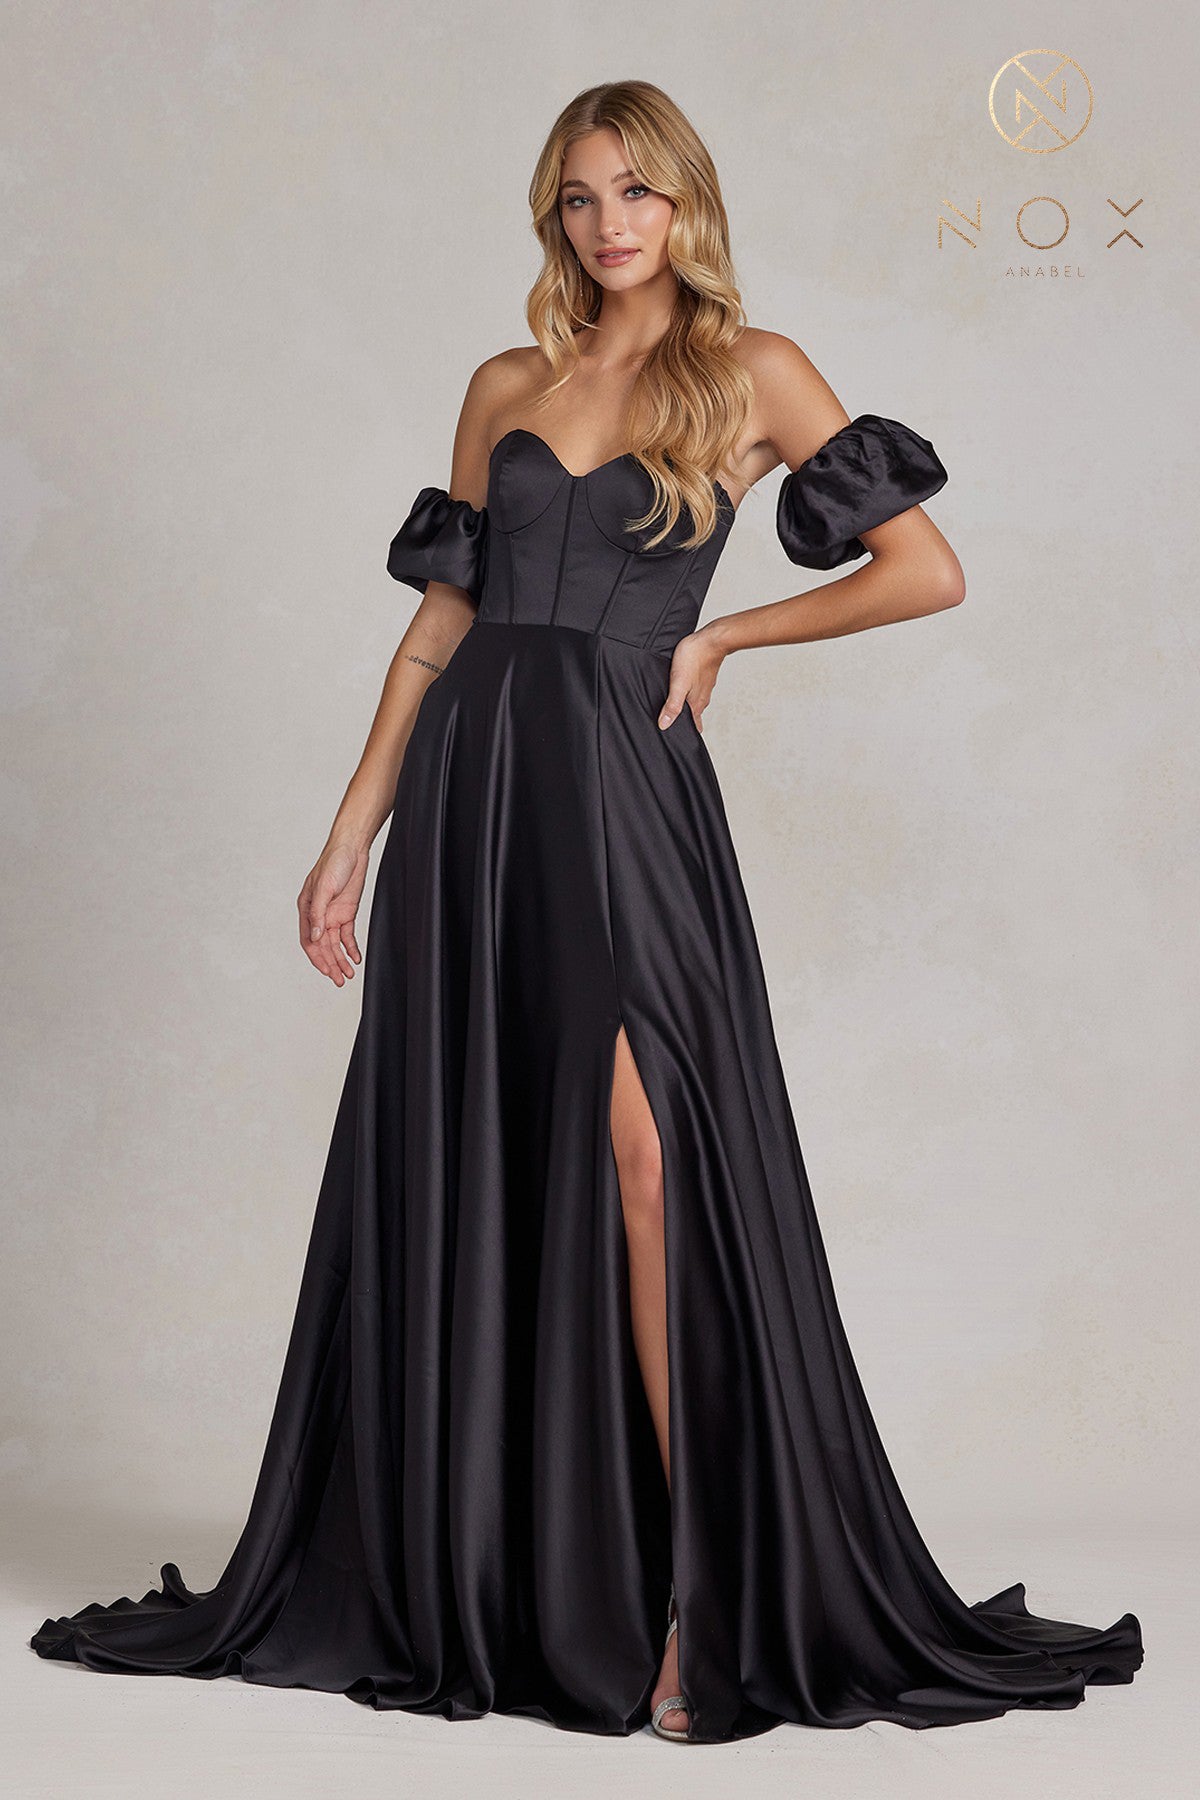 Corset Bodice Satin Dress By Nox Anabel -K1122